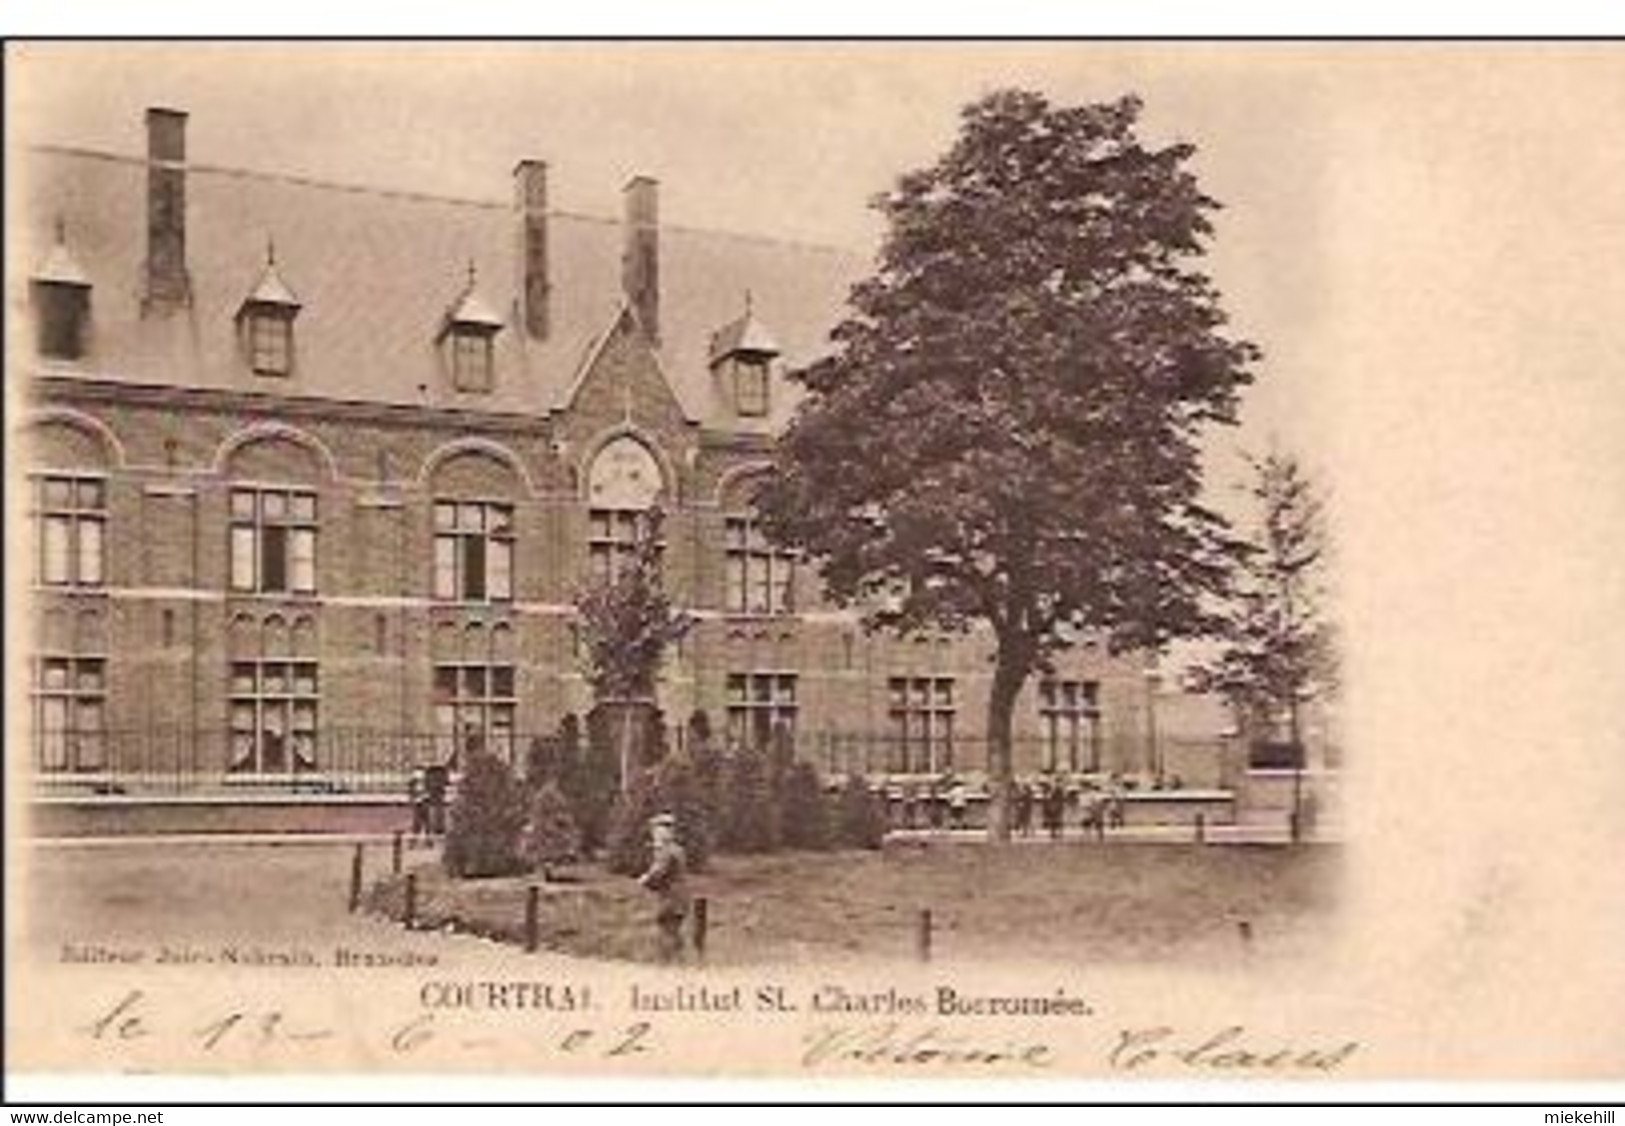 KORTRIJK-INSTITUT SAINT CHARLES BORROMEE - Kortrijk